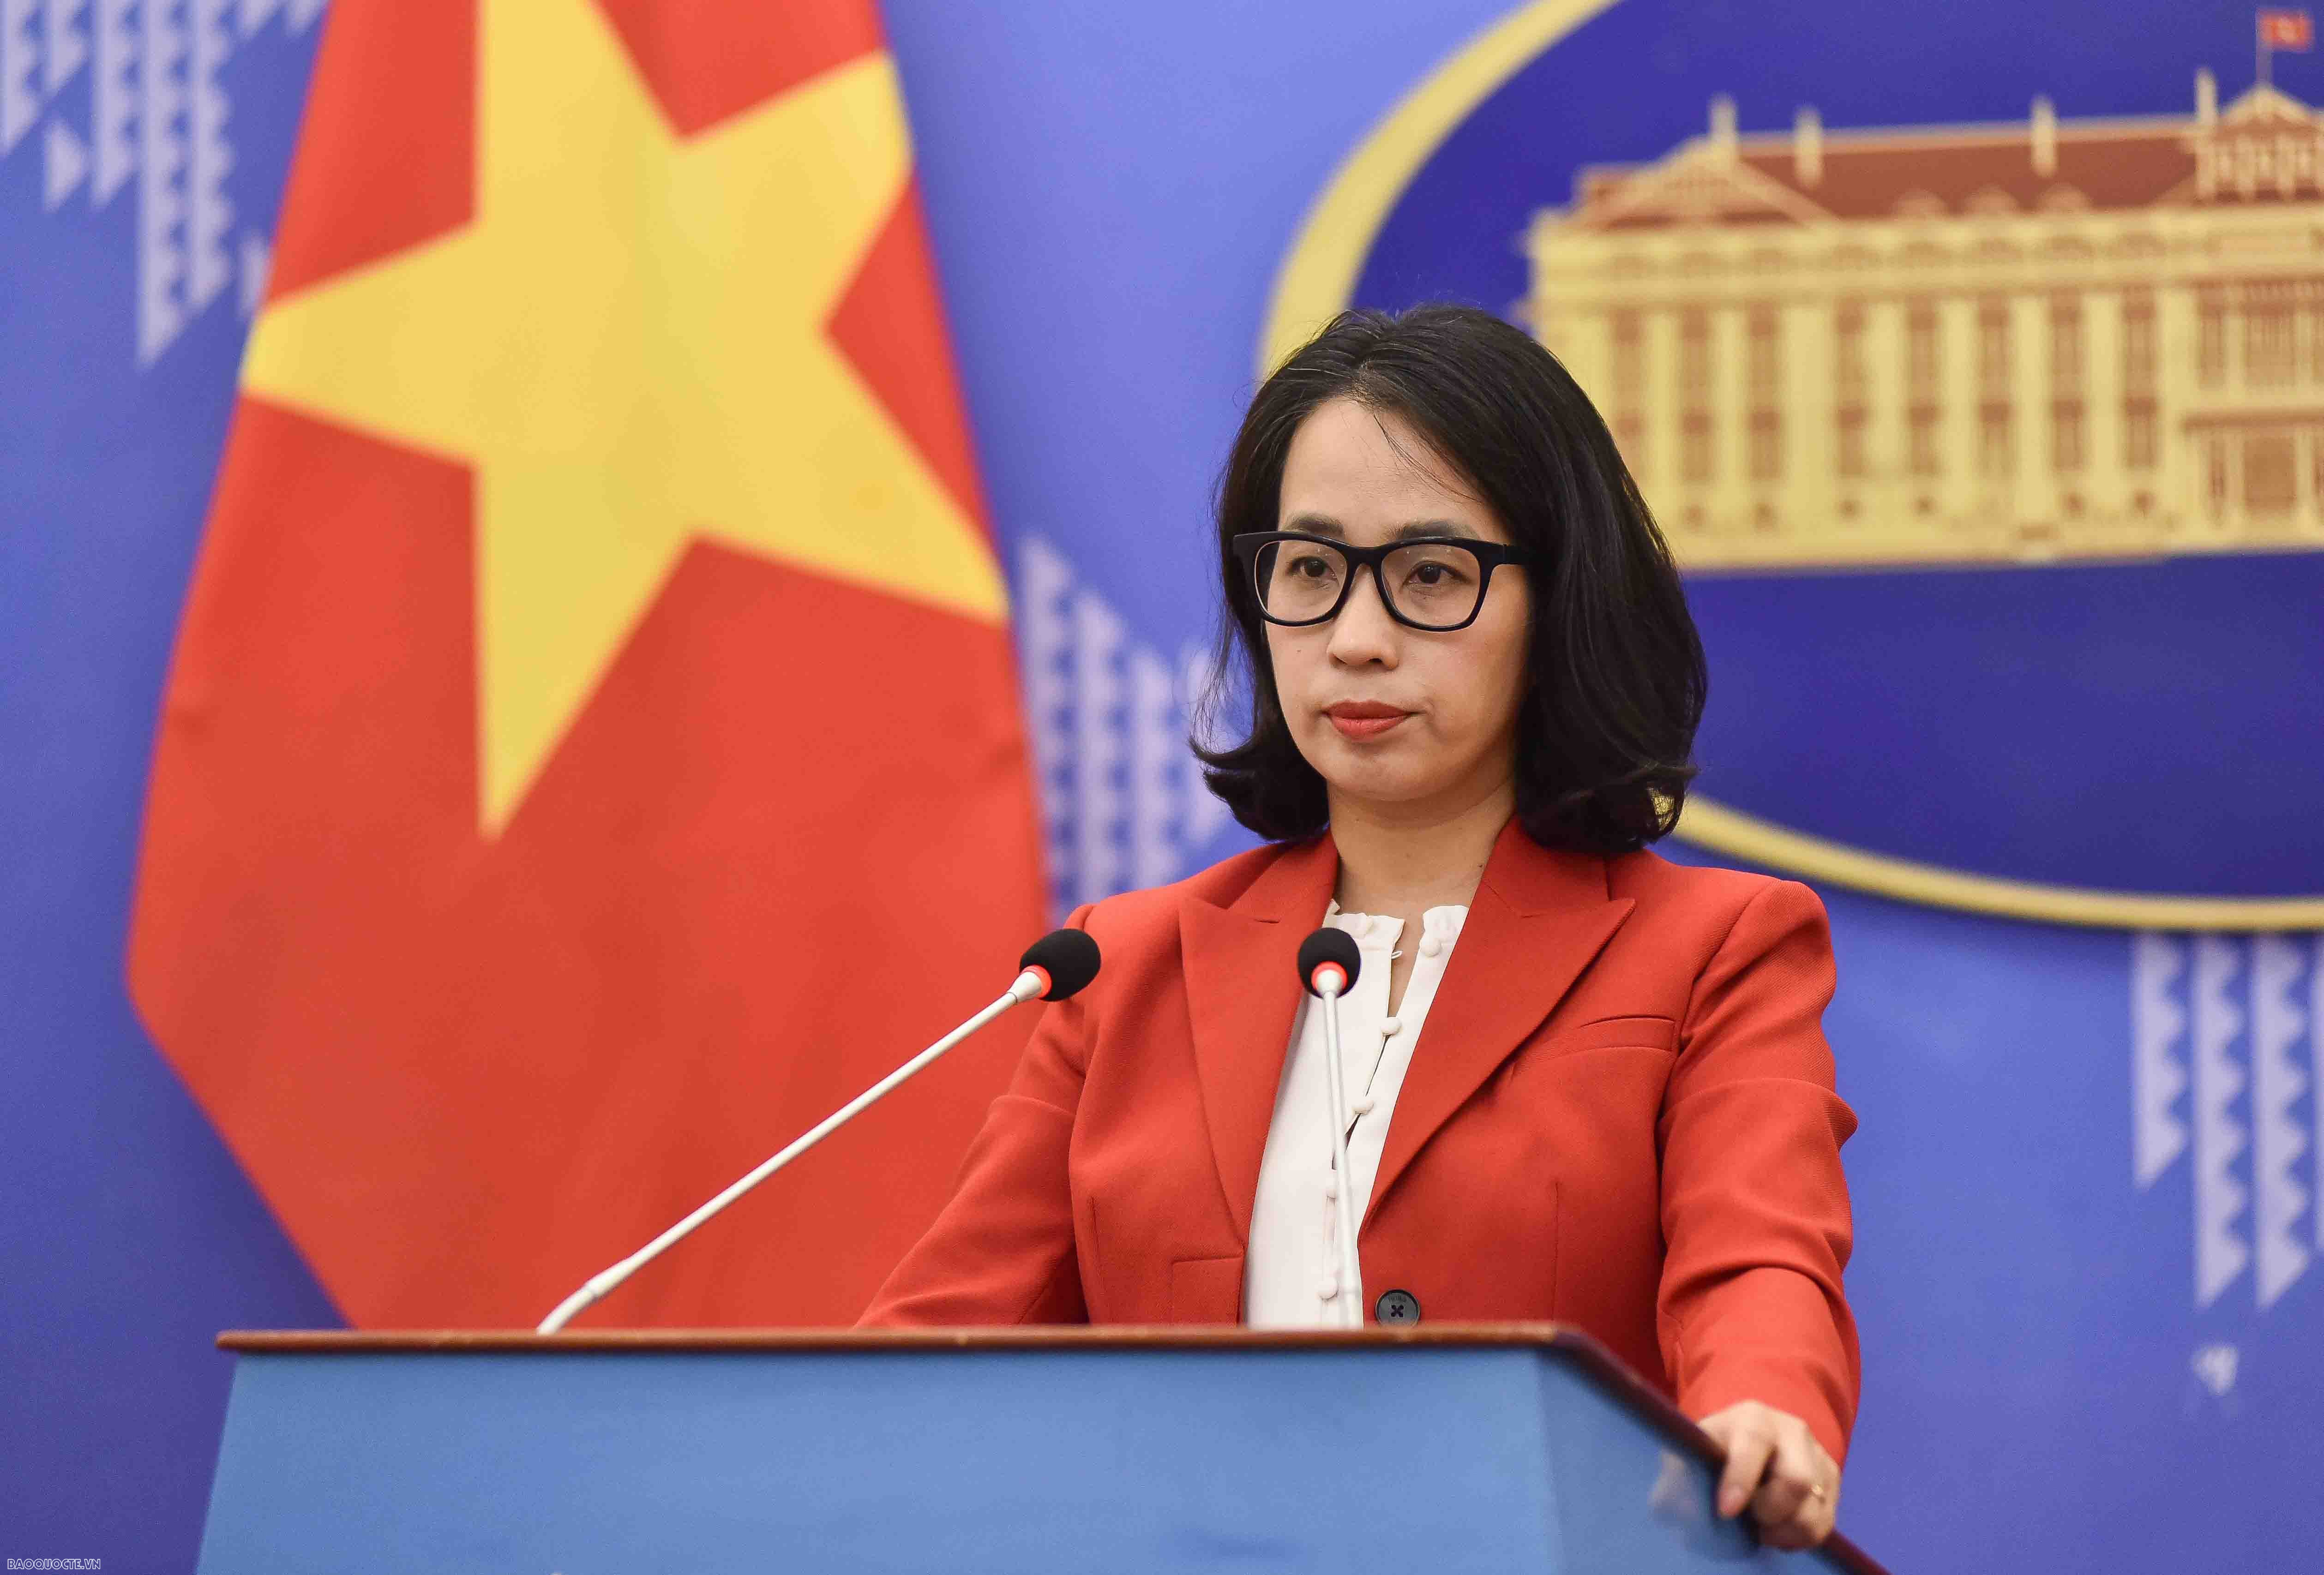 Vietnam, Cambodia work to raise public awareness of bilateral ties: Spokesperson